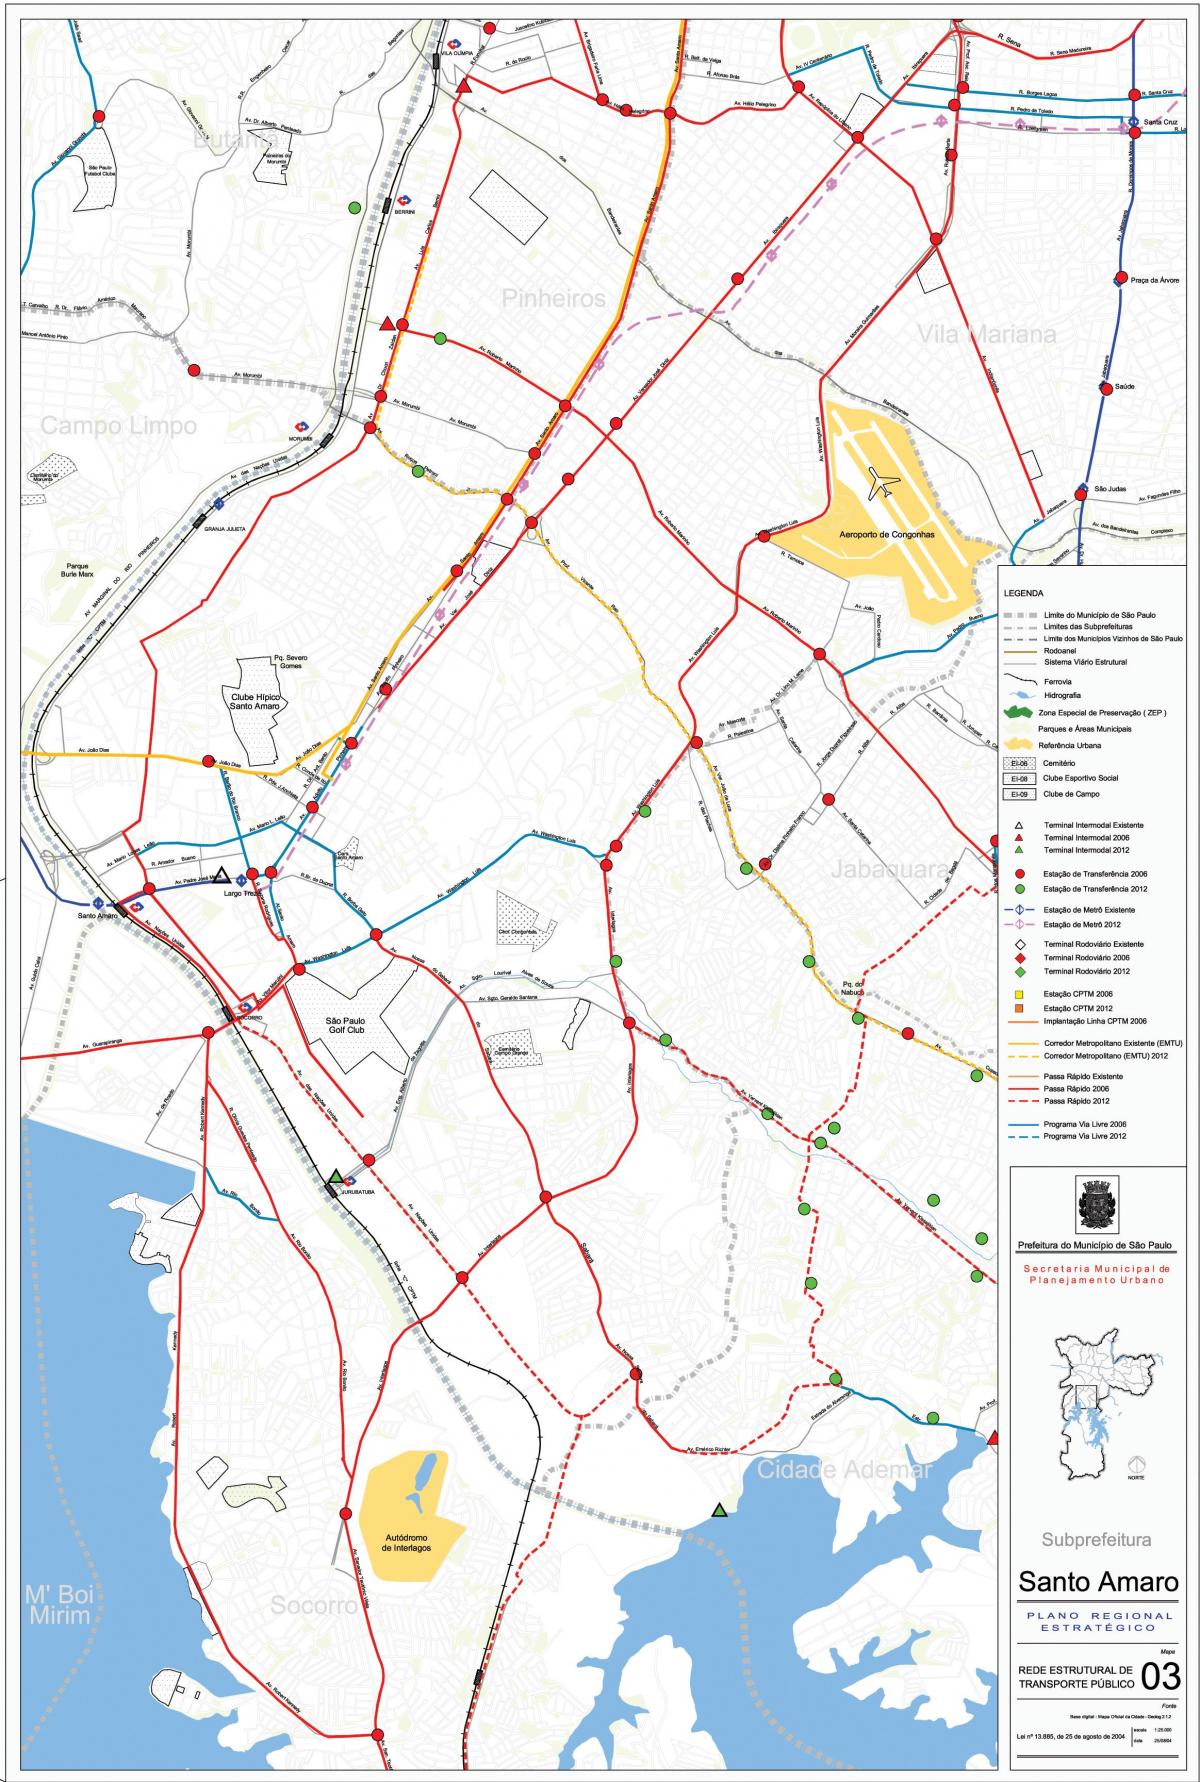 Map of Santo Amaro São Paulo - Public transports